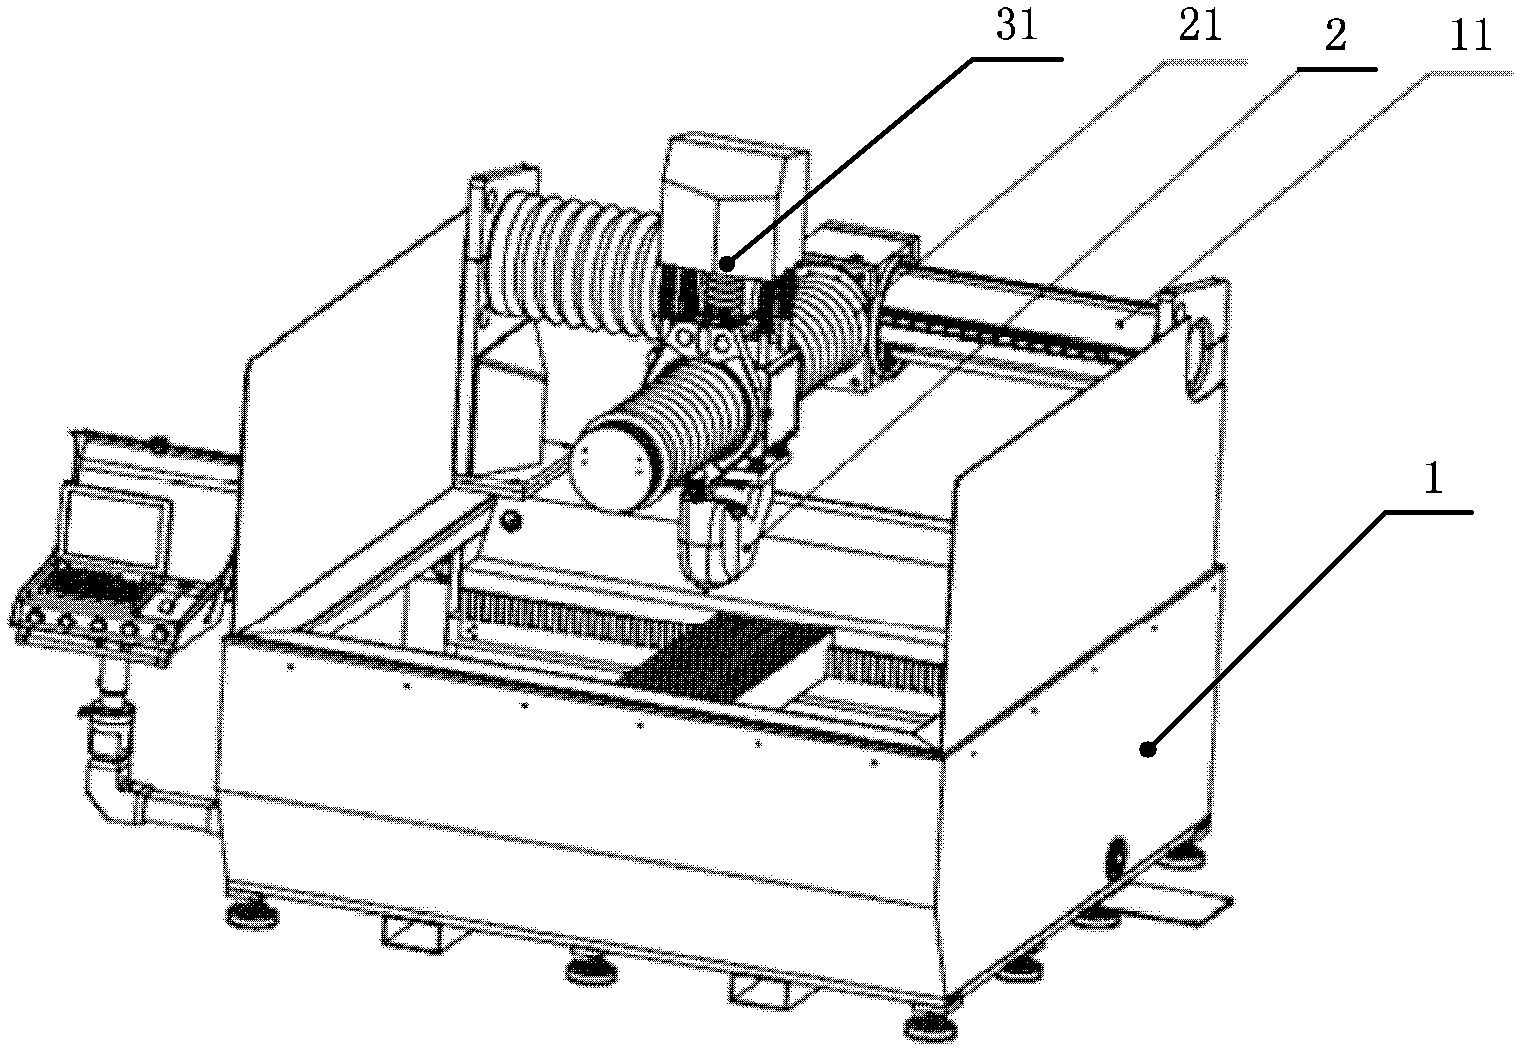 Orthogonal three-axis machine tool